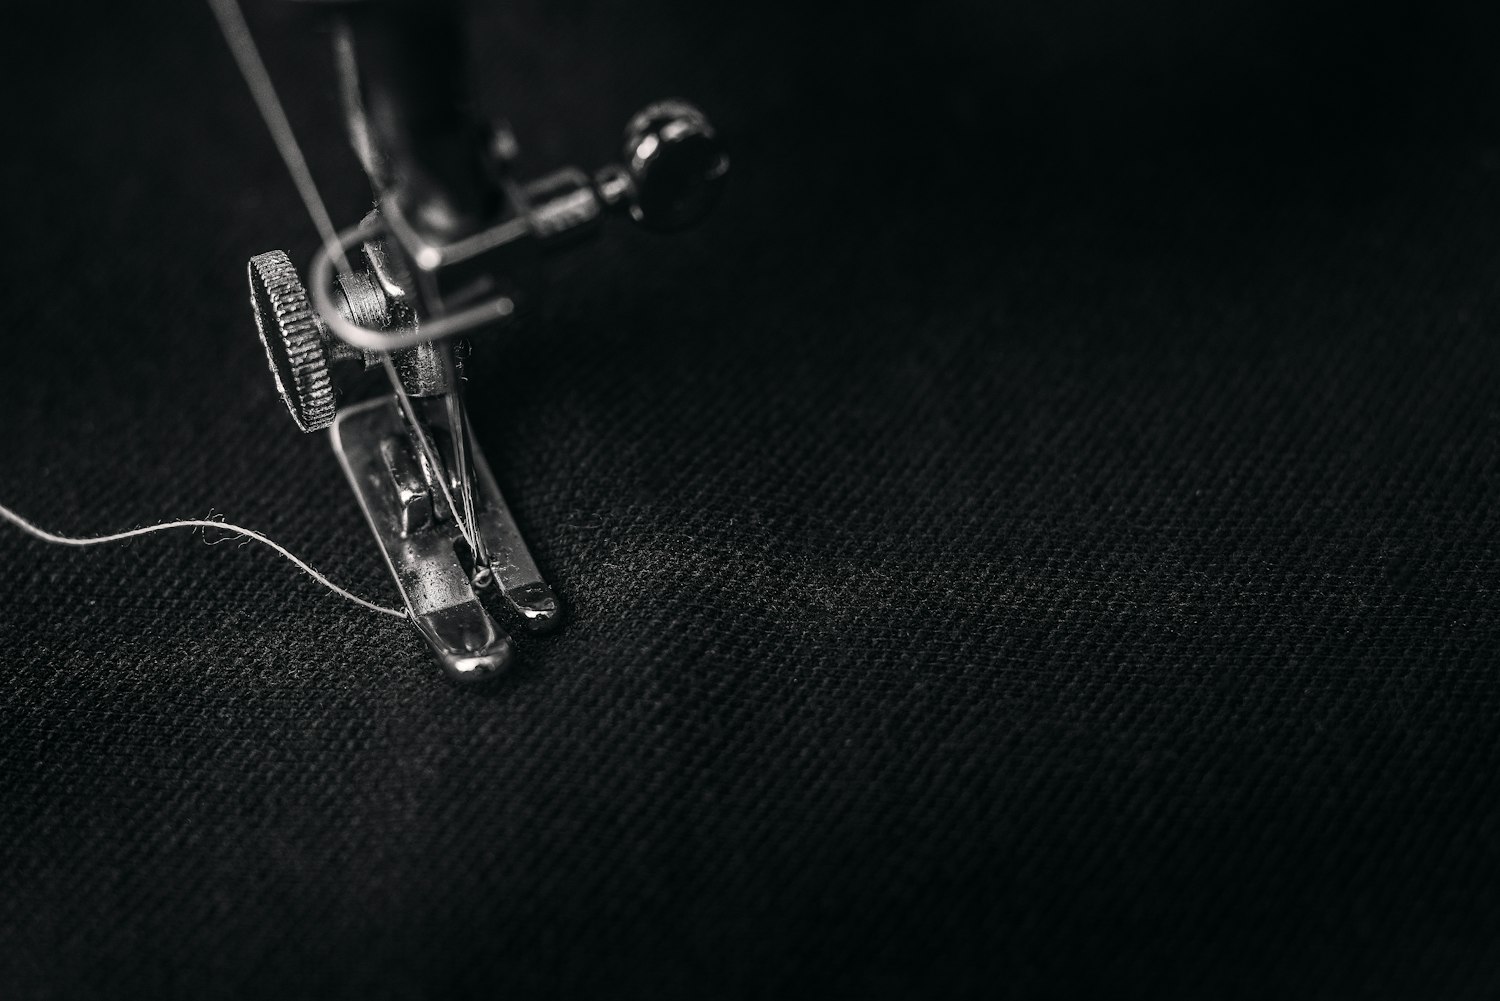 sewing machine on black fabric